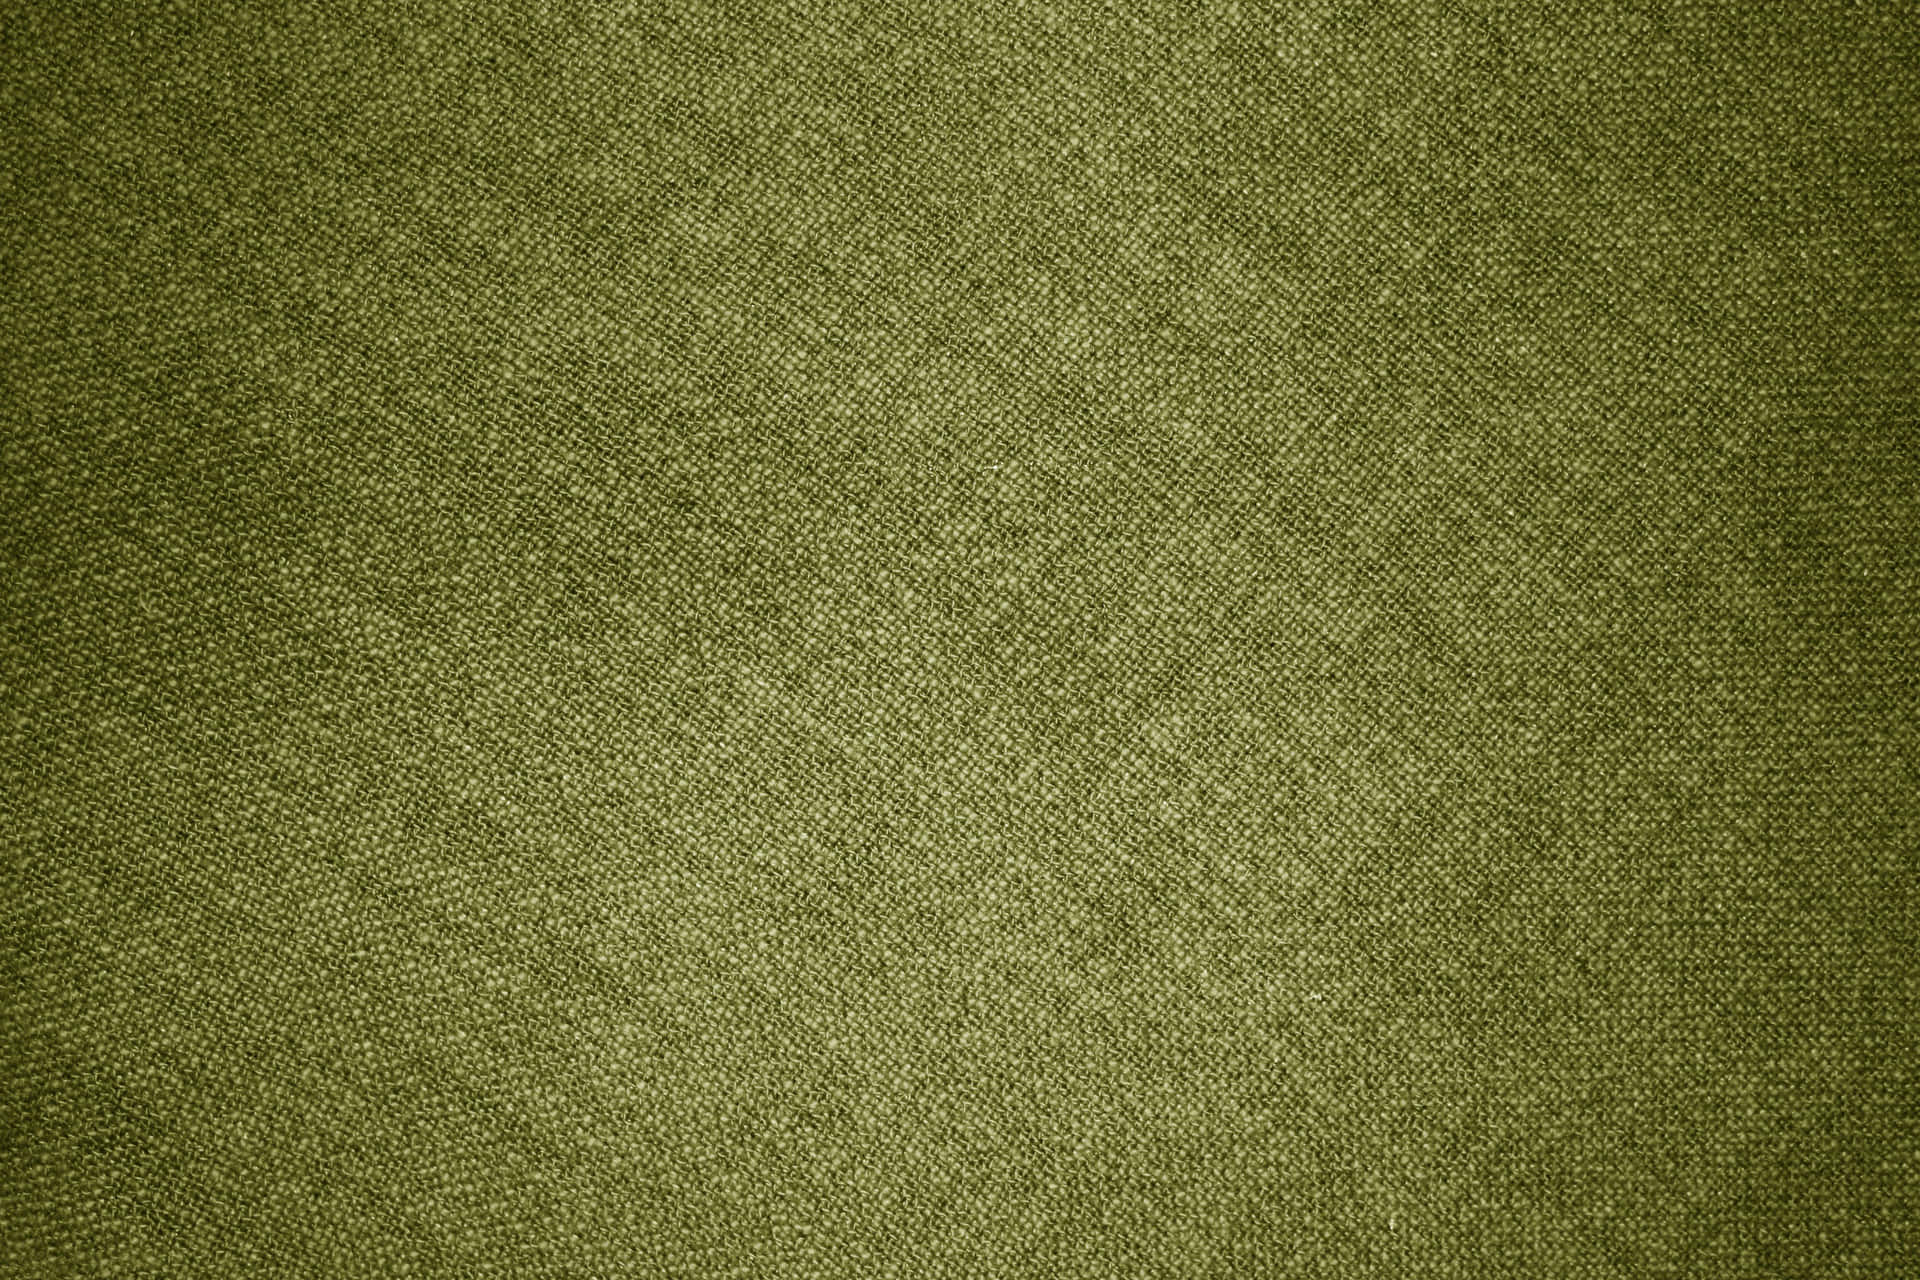 Olive Green 3888 X 2592 Wallpaper Wallpaper